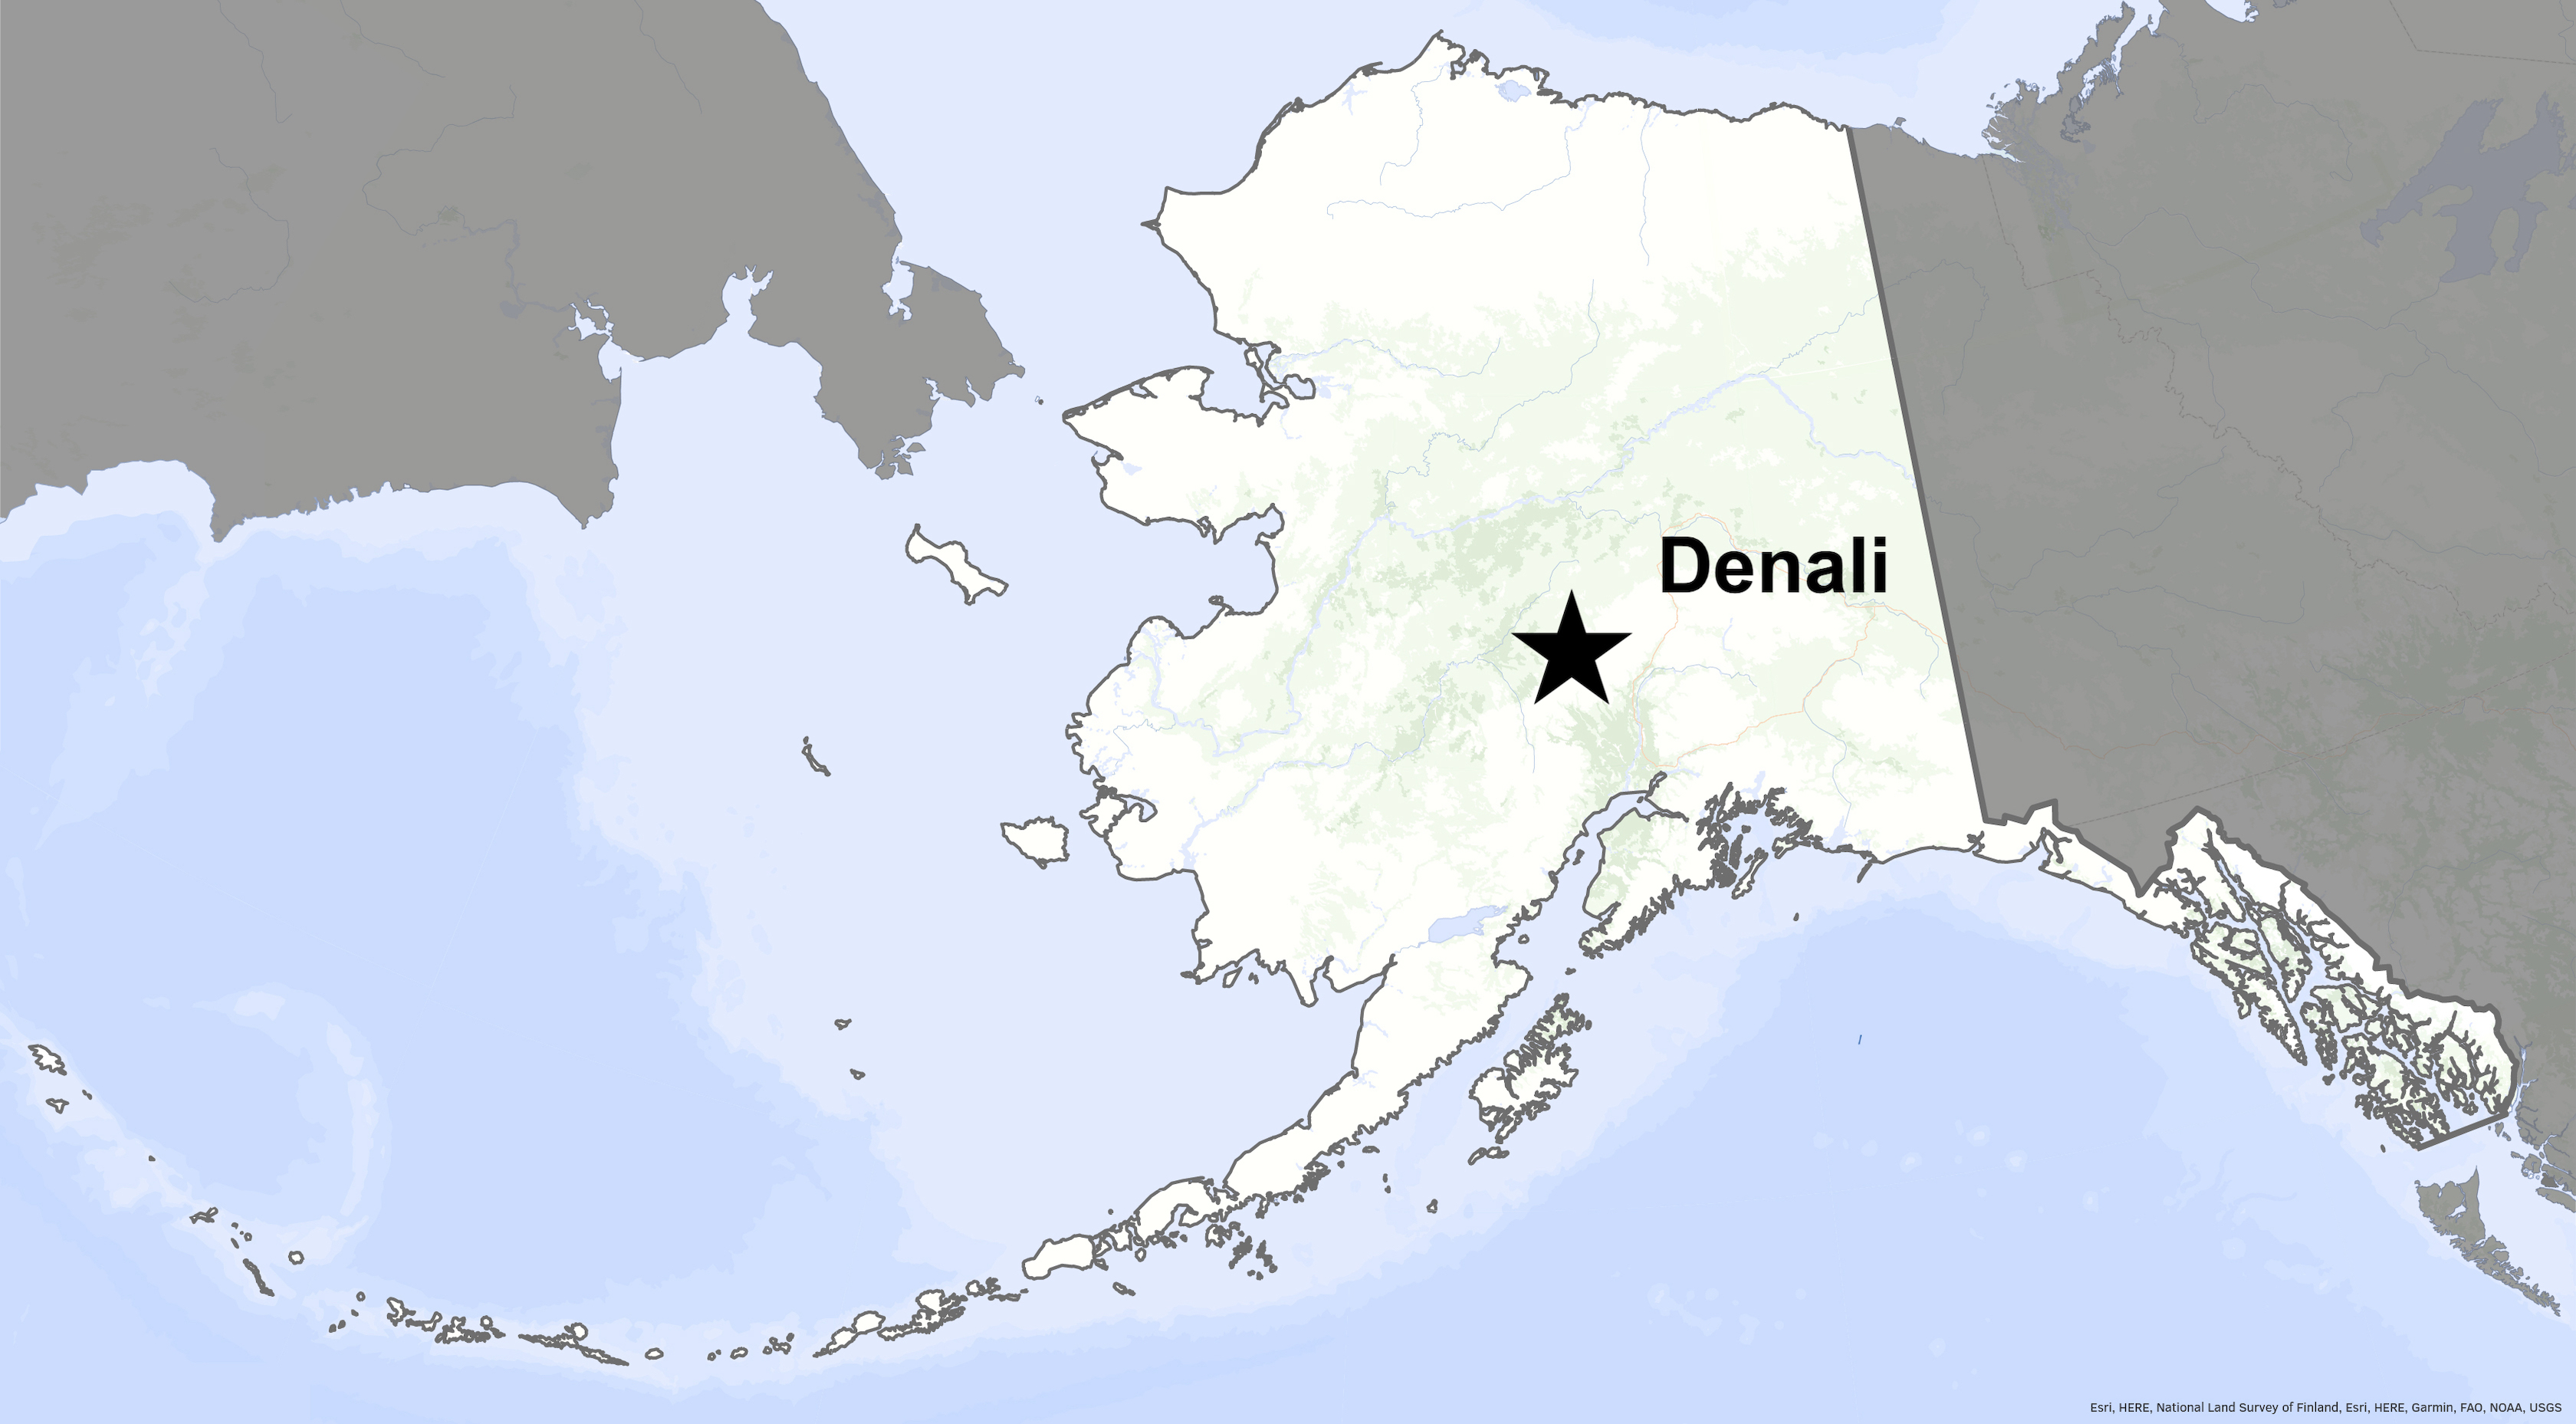 A star on a map of Alaska marks Denali's location.